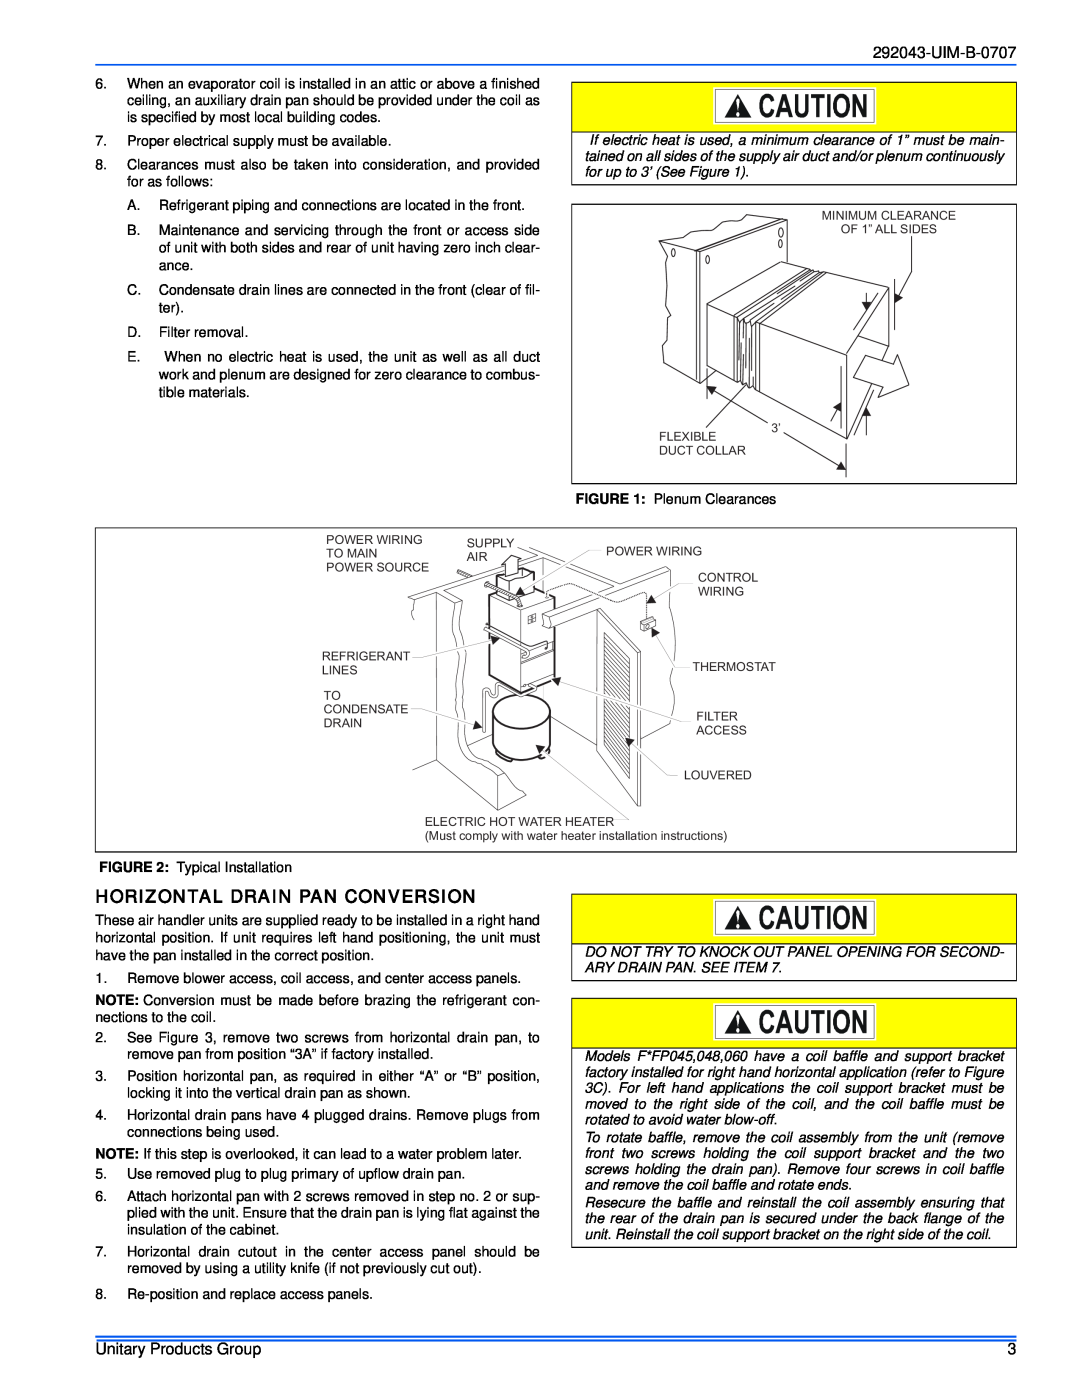 Coleman F*FP installation manual Horizontal Drain Pan Conversion, Unitary Products Group, UIM-B-0707 